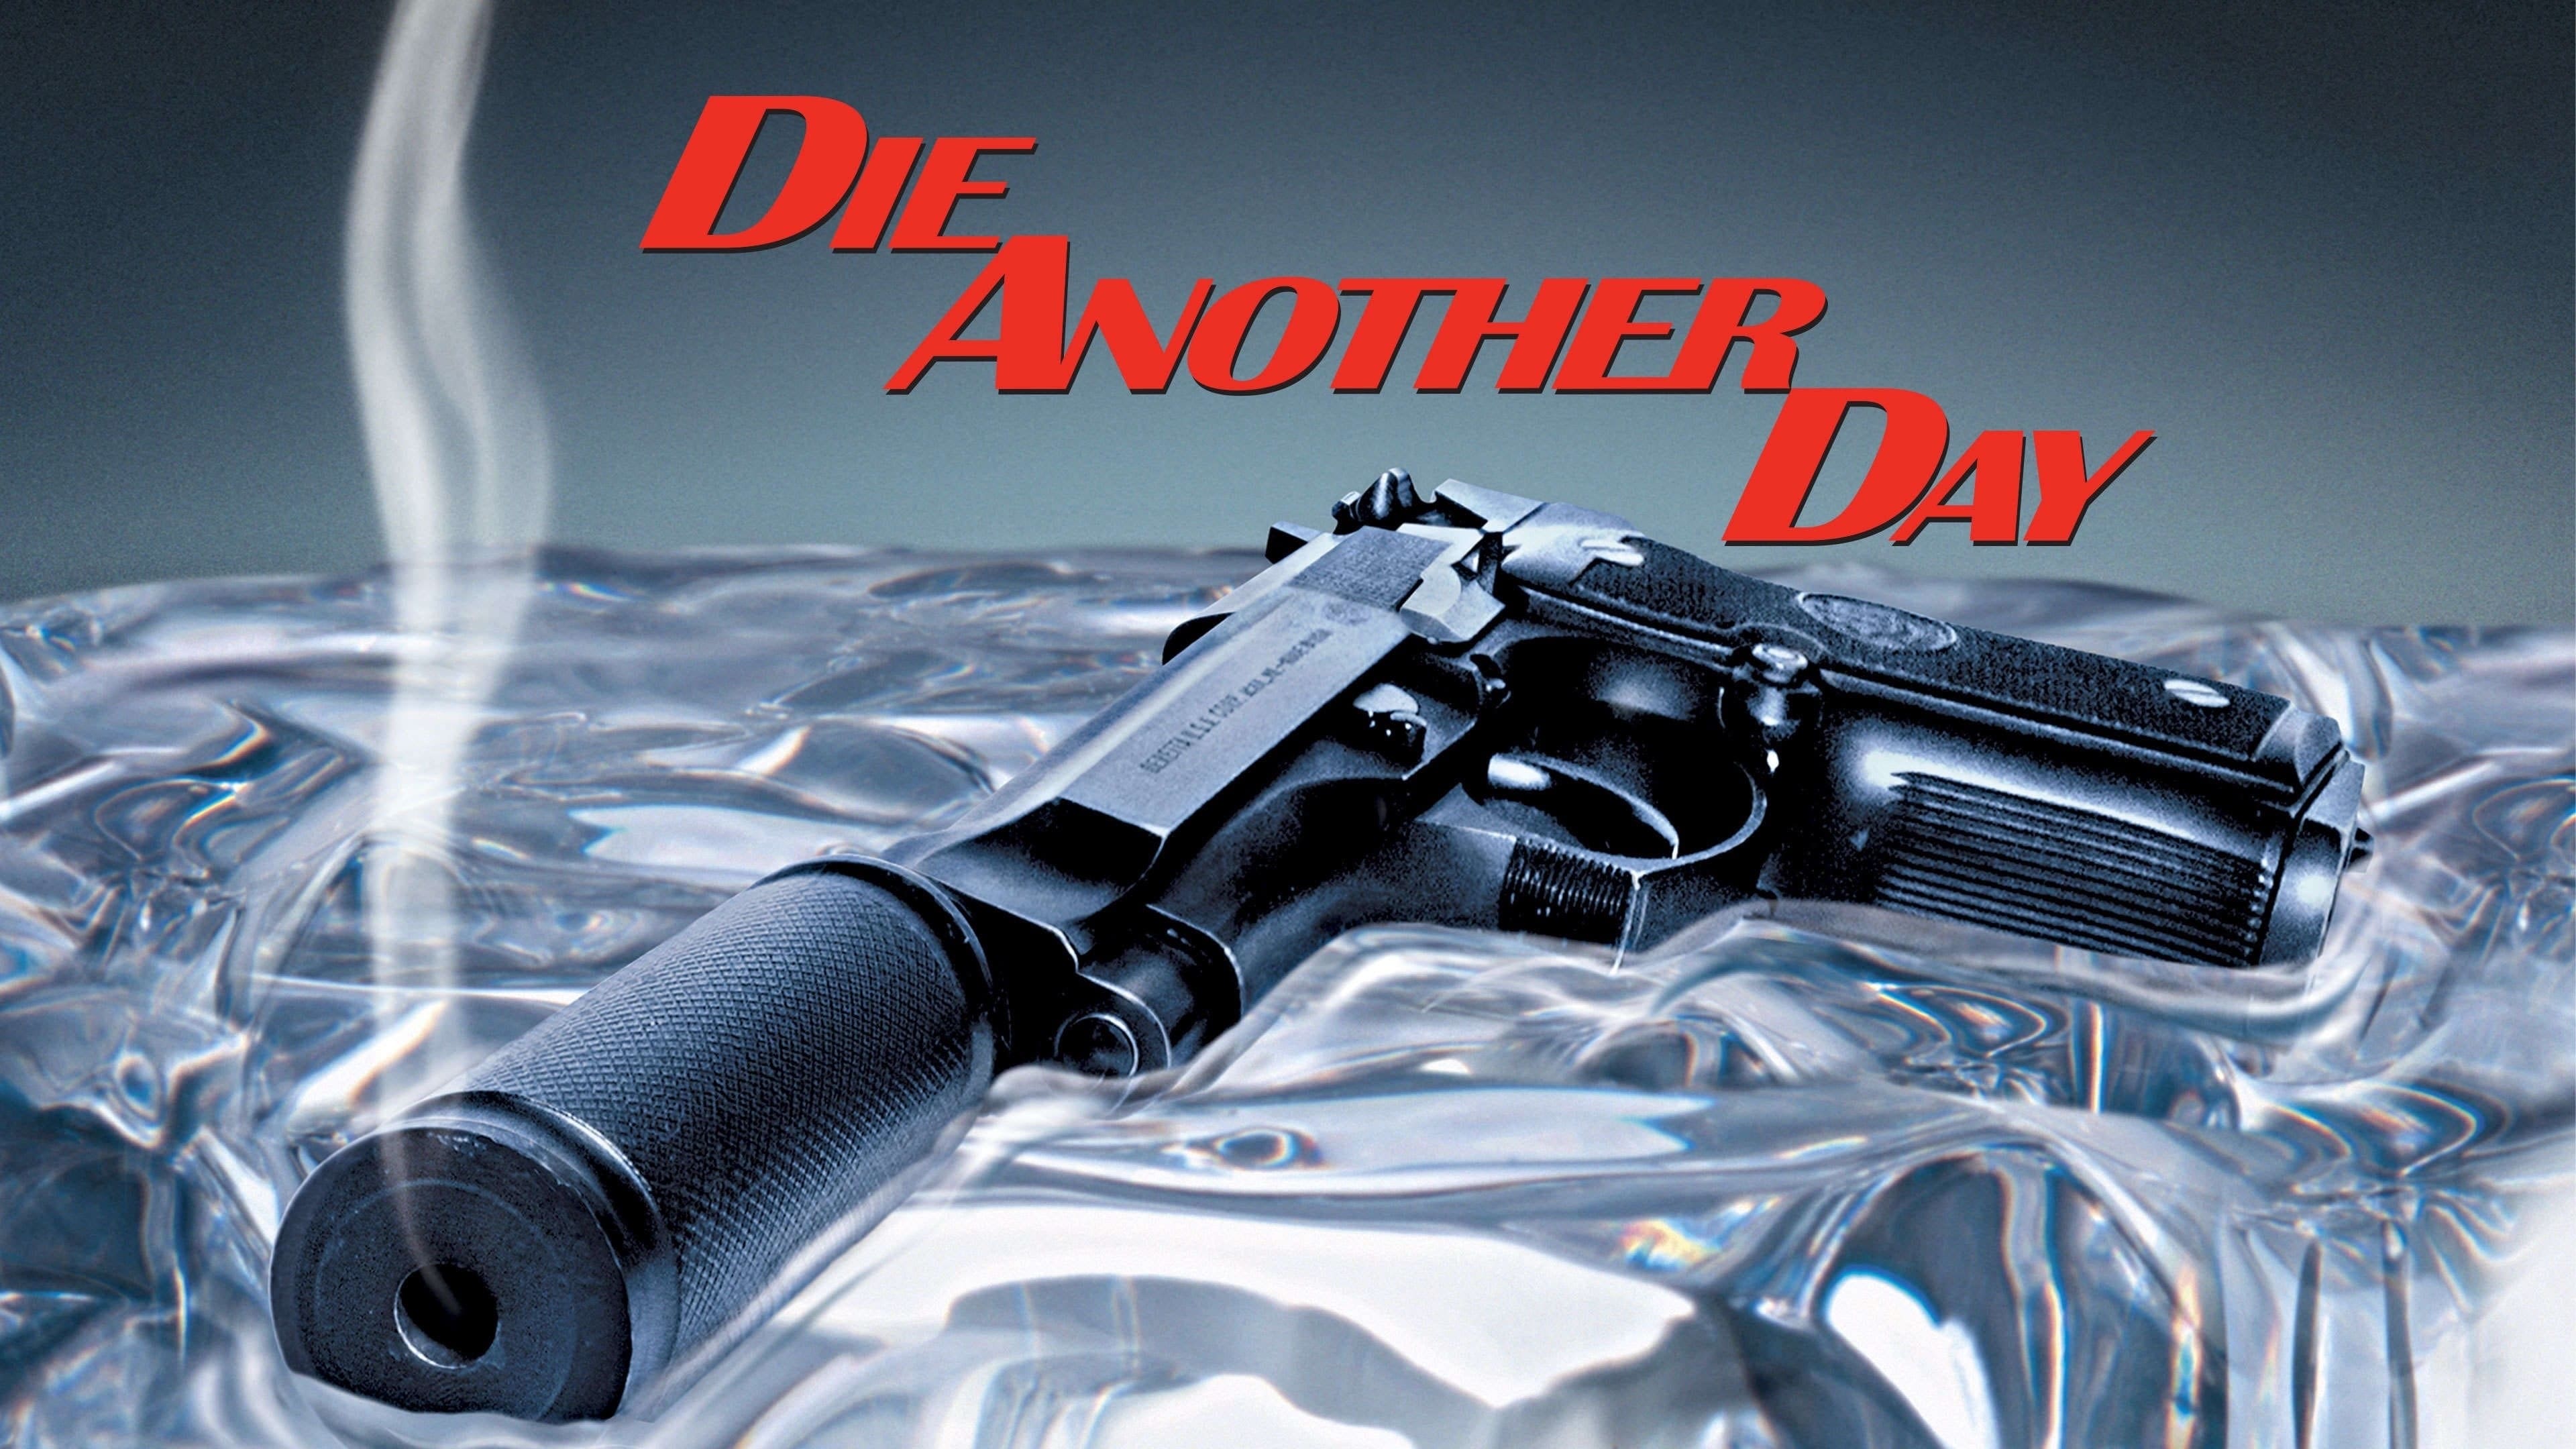 James Bond: Die Another Day